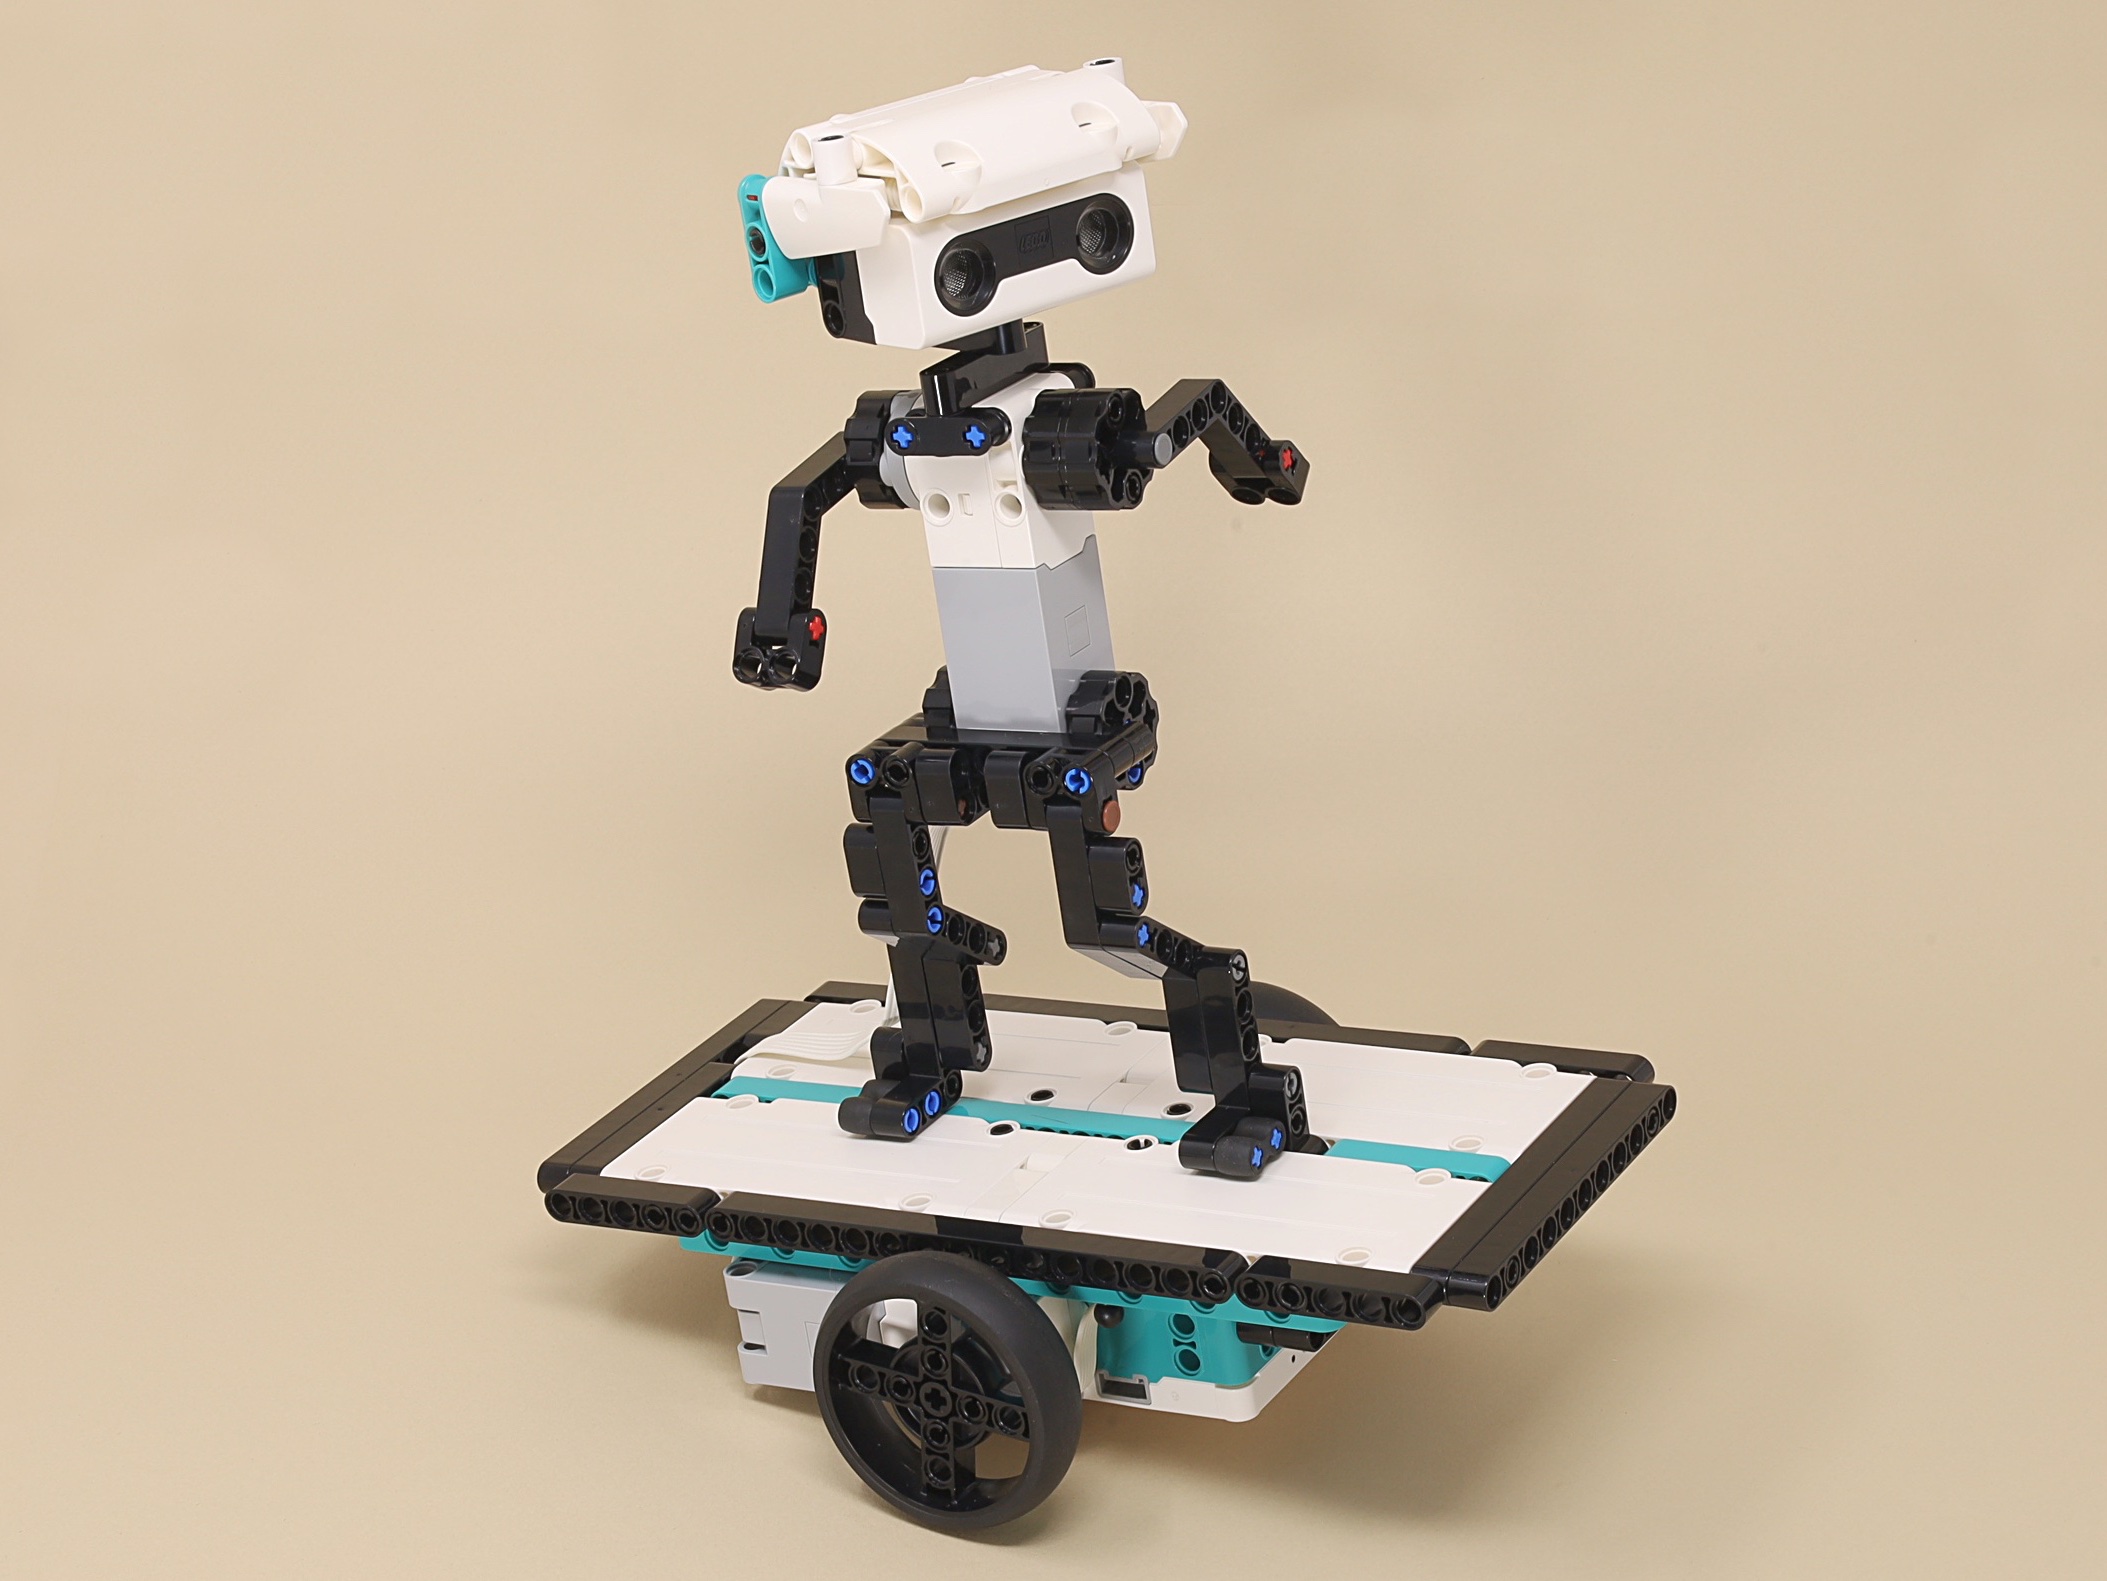 LEGO MINDSTORMS Robot Inventor custom models with building